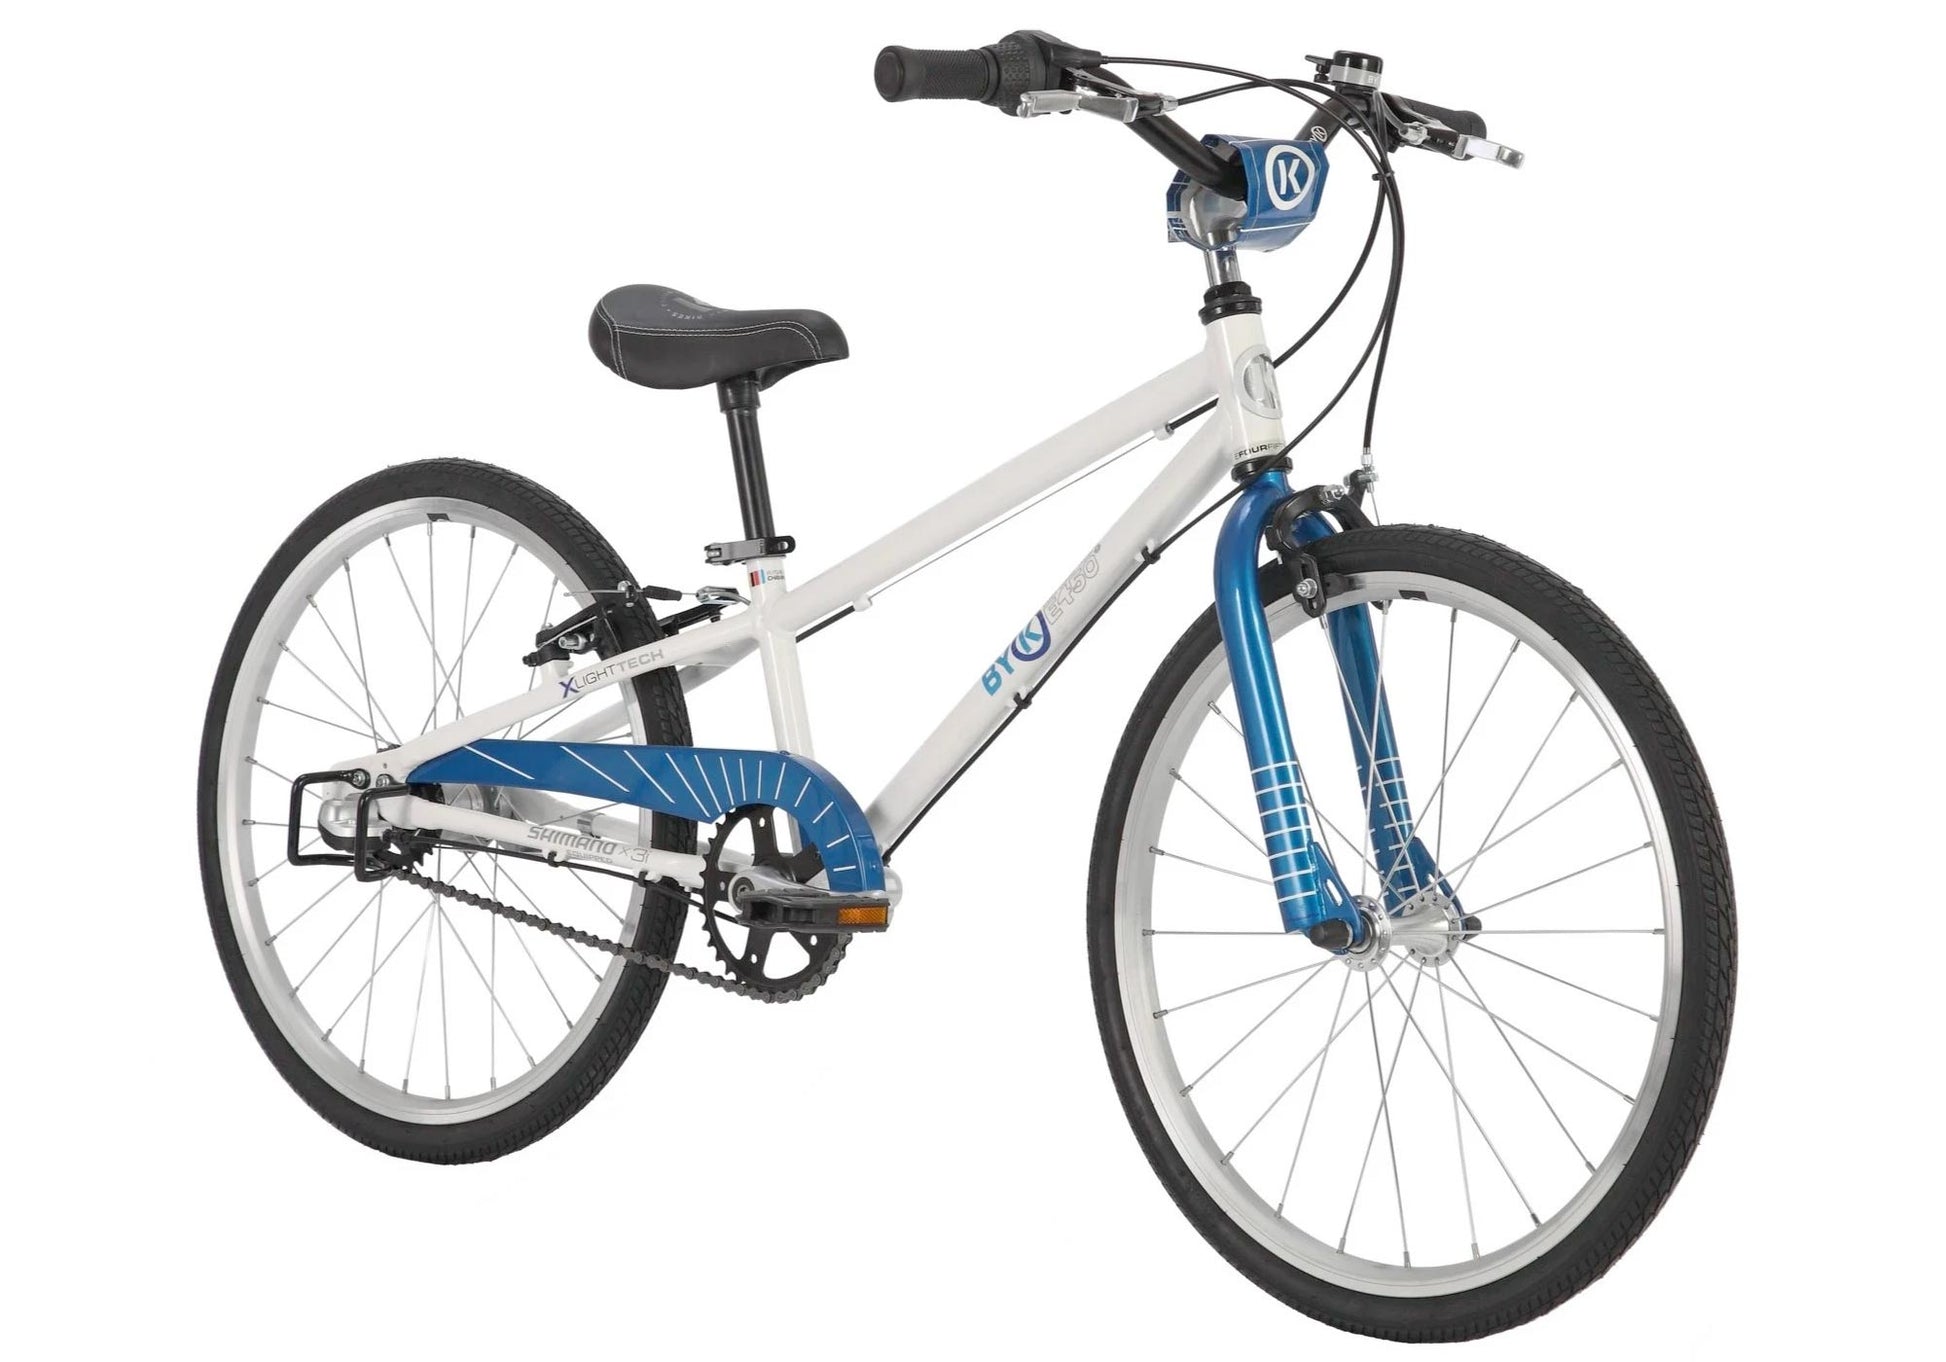 BYK E450X3i Boys Bike, White Cyan Blue - Rider height: 110-132cm